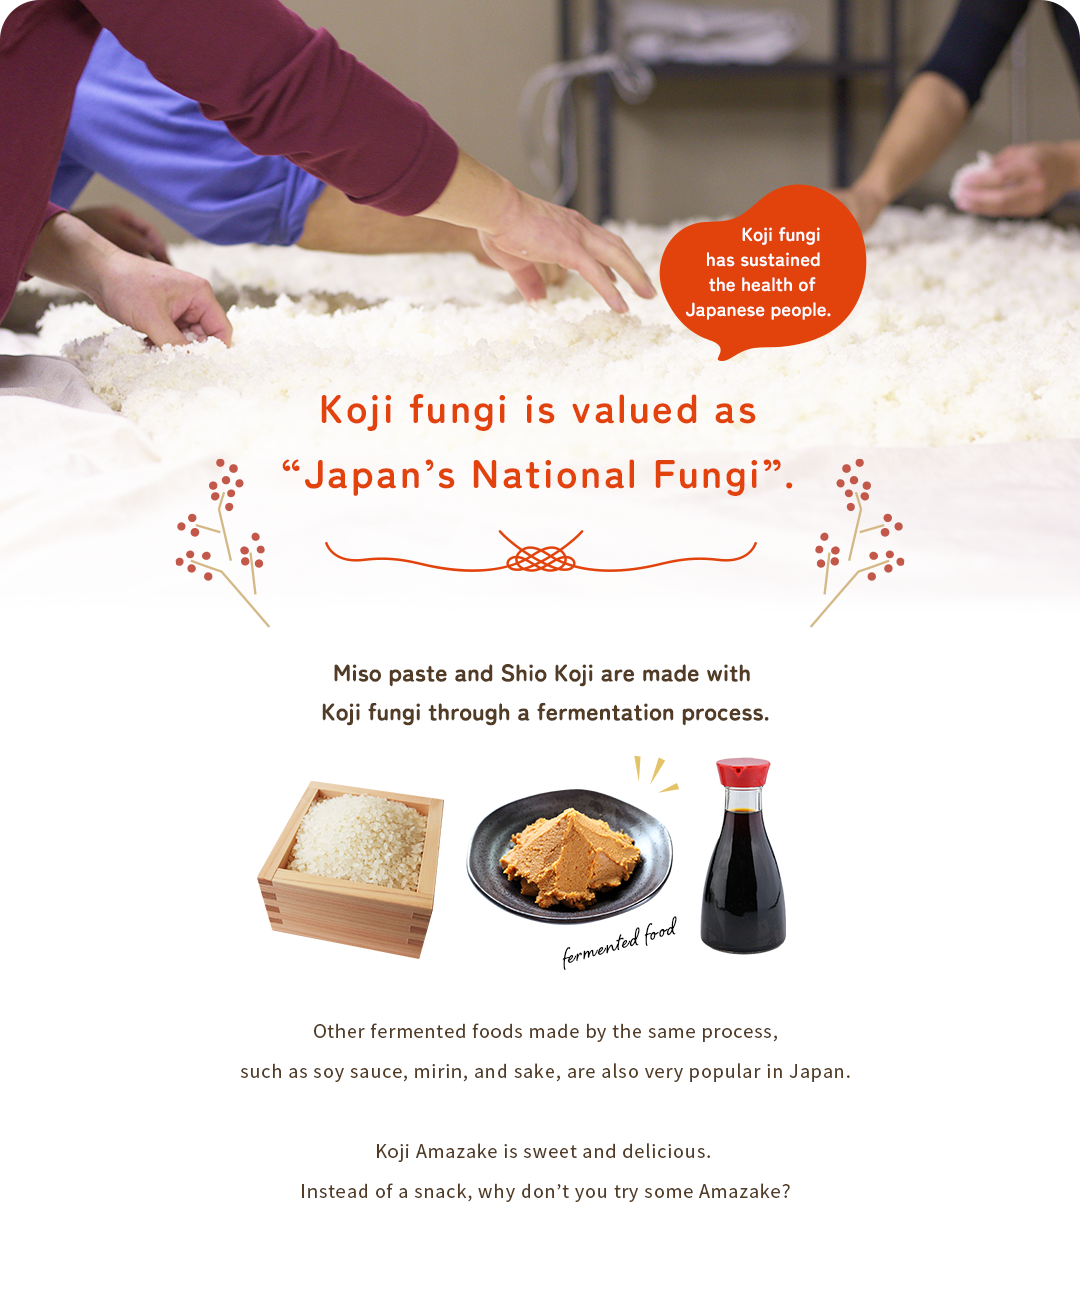 Koji fungi is valued as
“Japan’s National Fungi”.